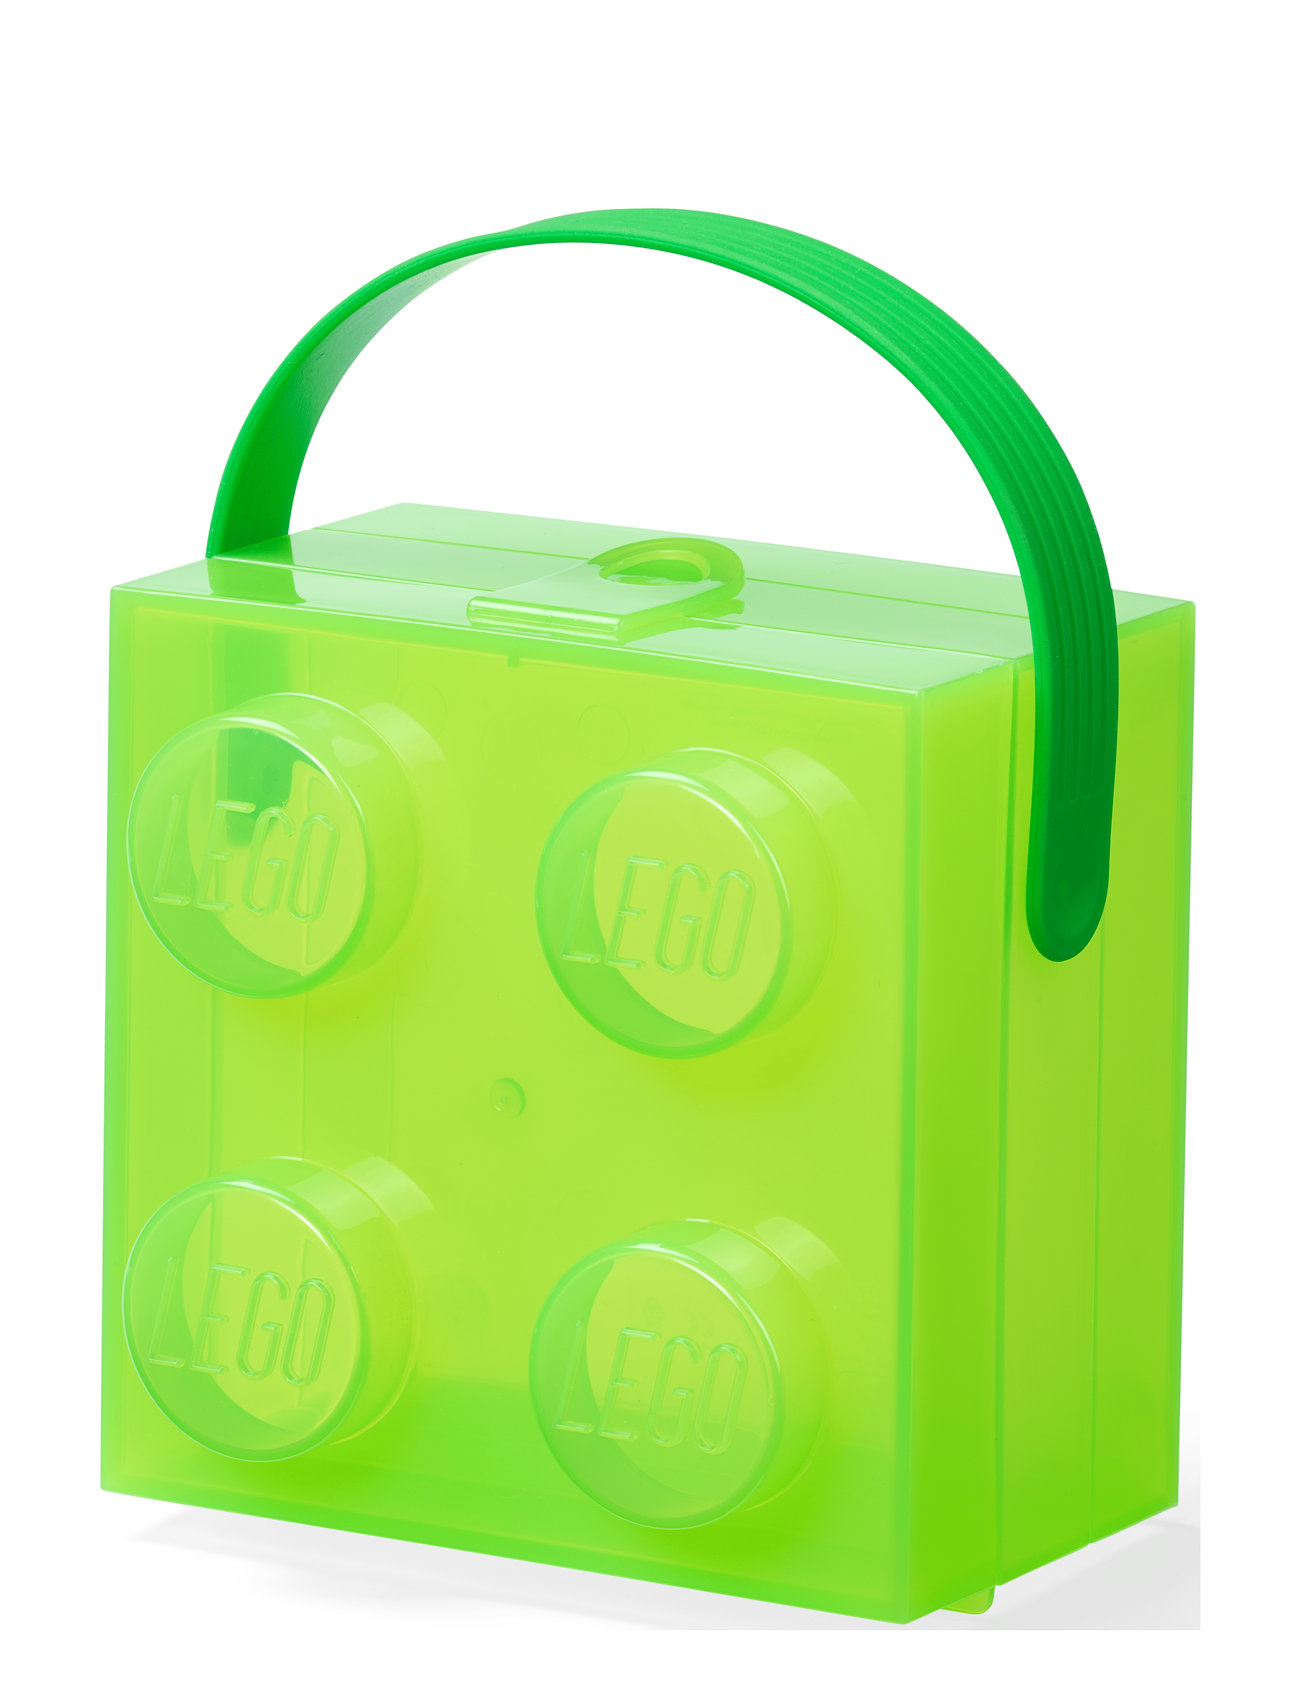 Lego Box W. Handle Translucent Green Home Kids Decor Storage Storage Boxes Green LEGO STORAGE